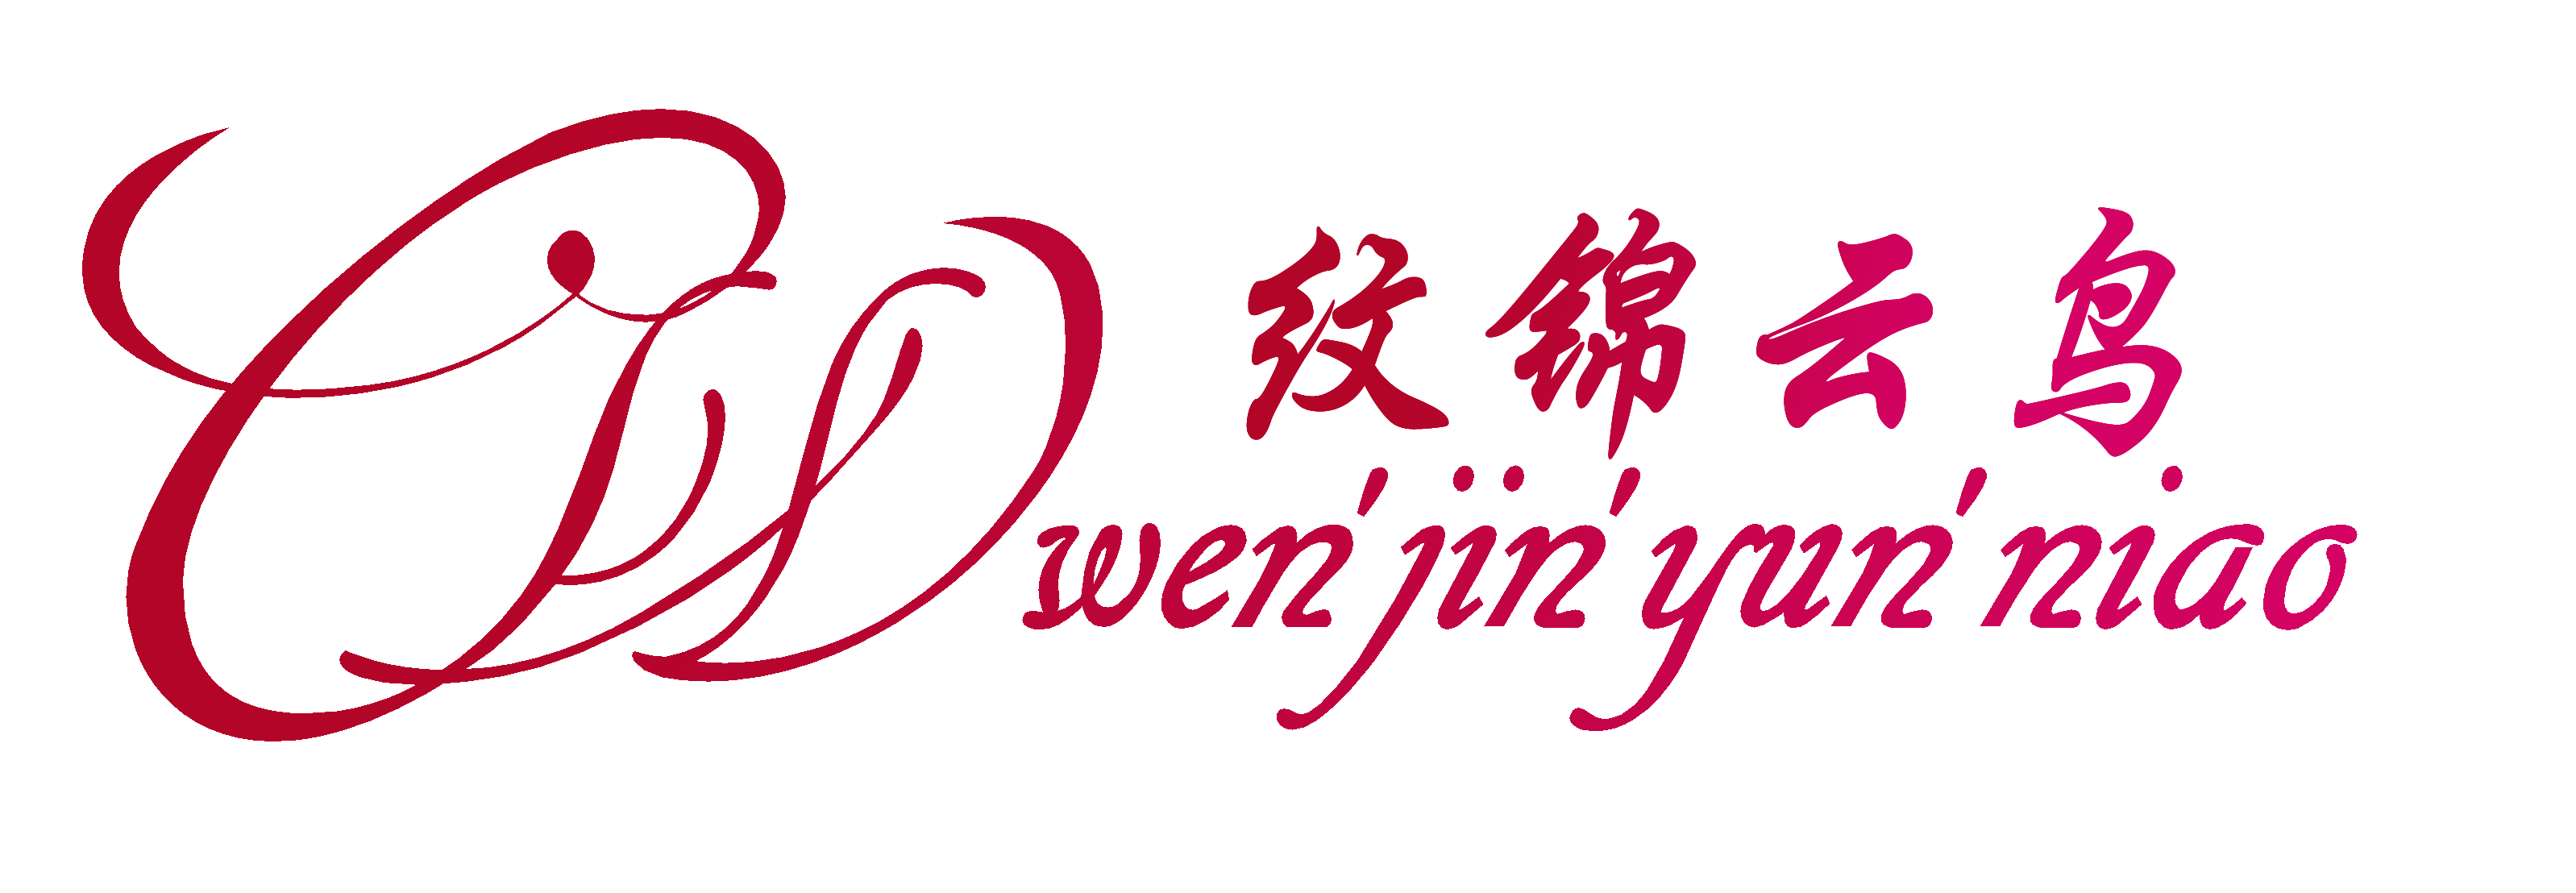 安徽纹锦云鸟 logo .png